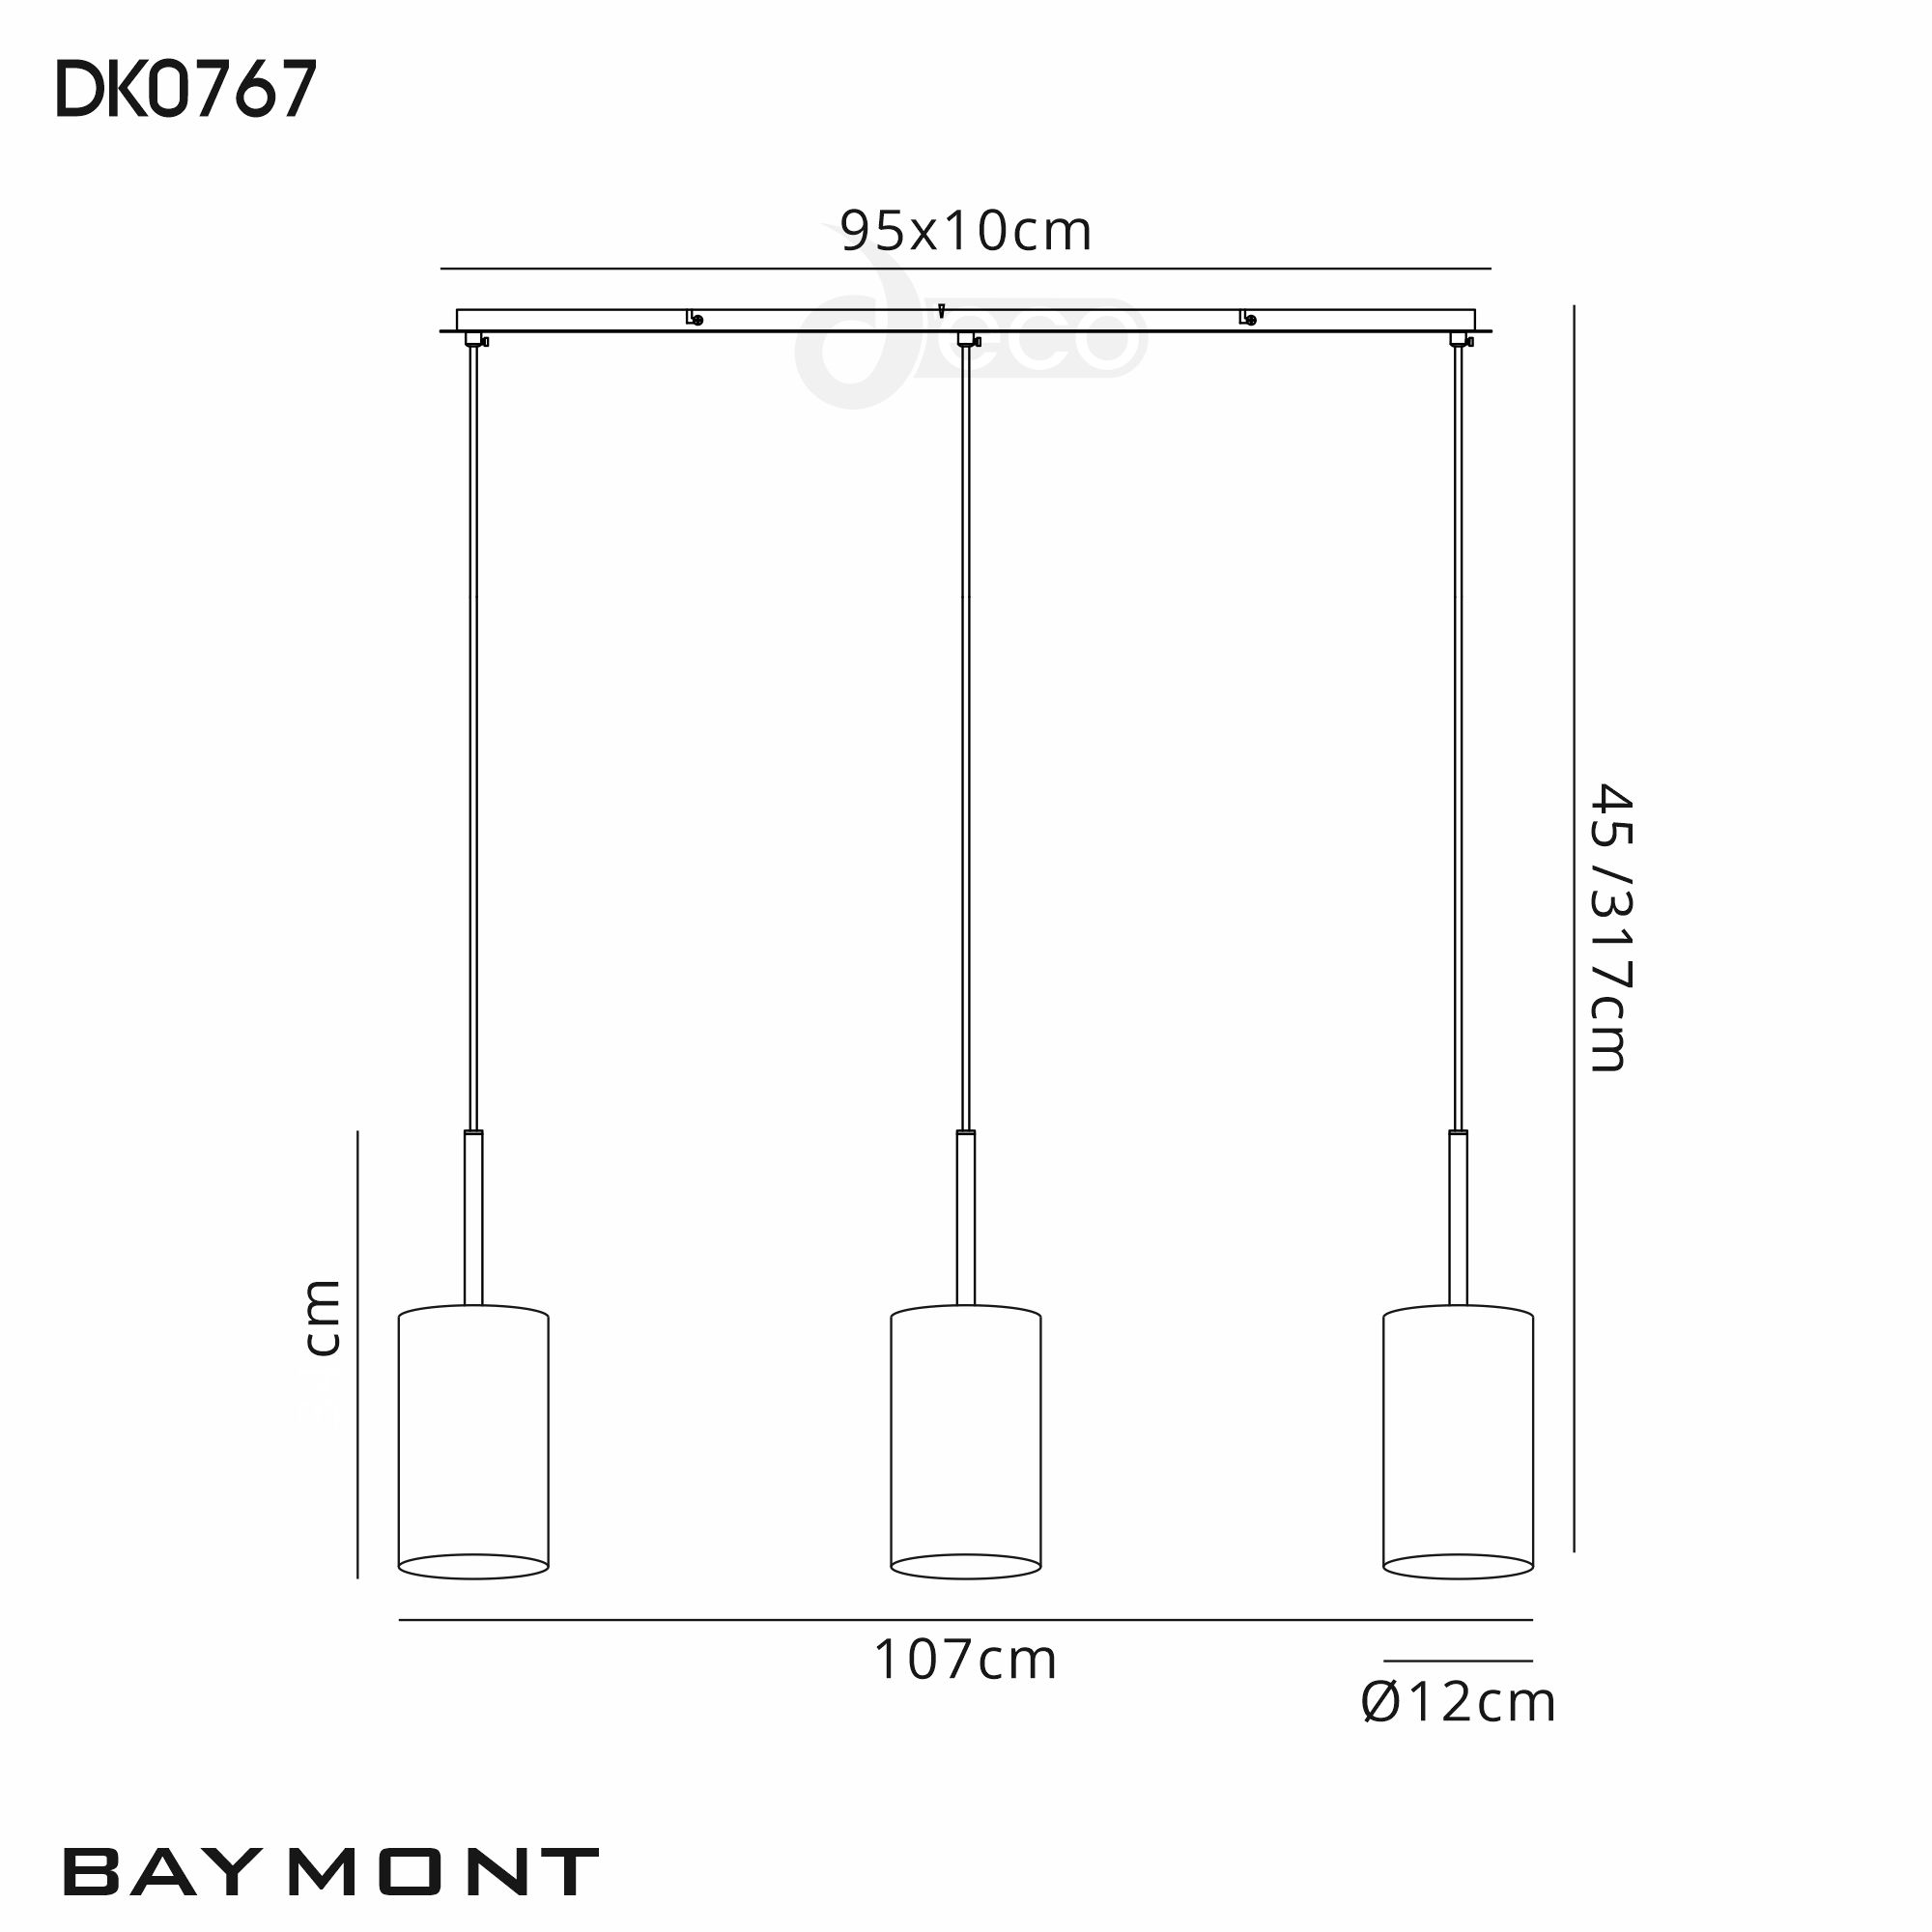 DK0767  Baymont 12cm Shade 3 Light Pendant Polished Chrome, Black/White